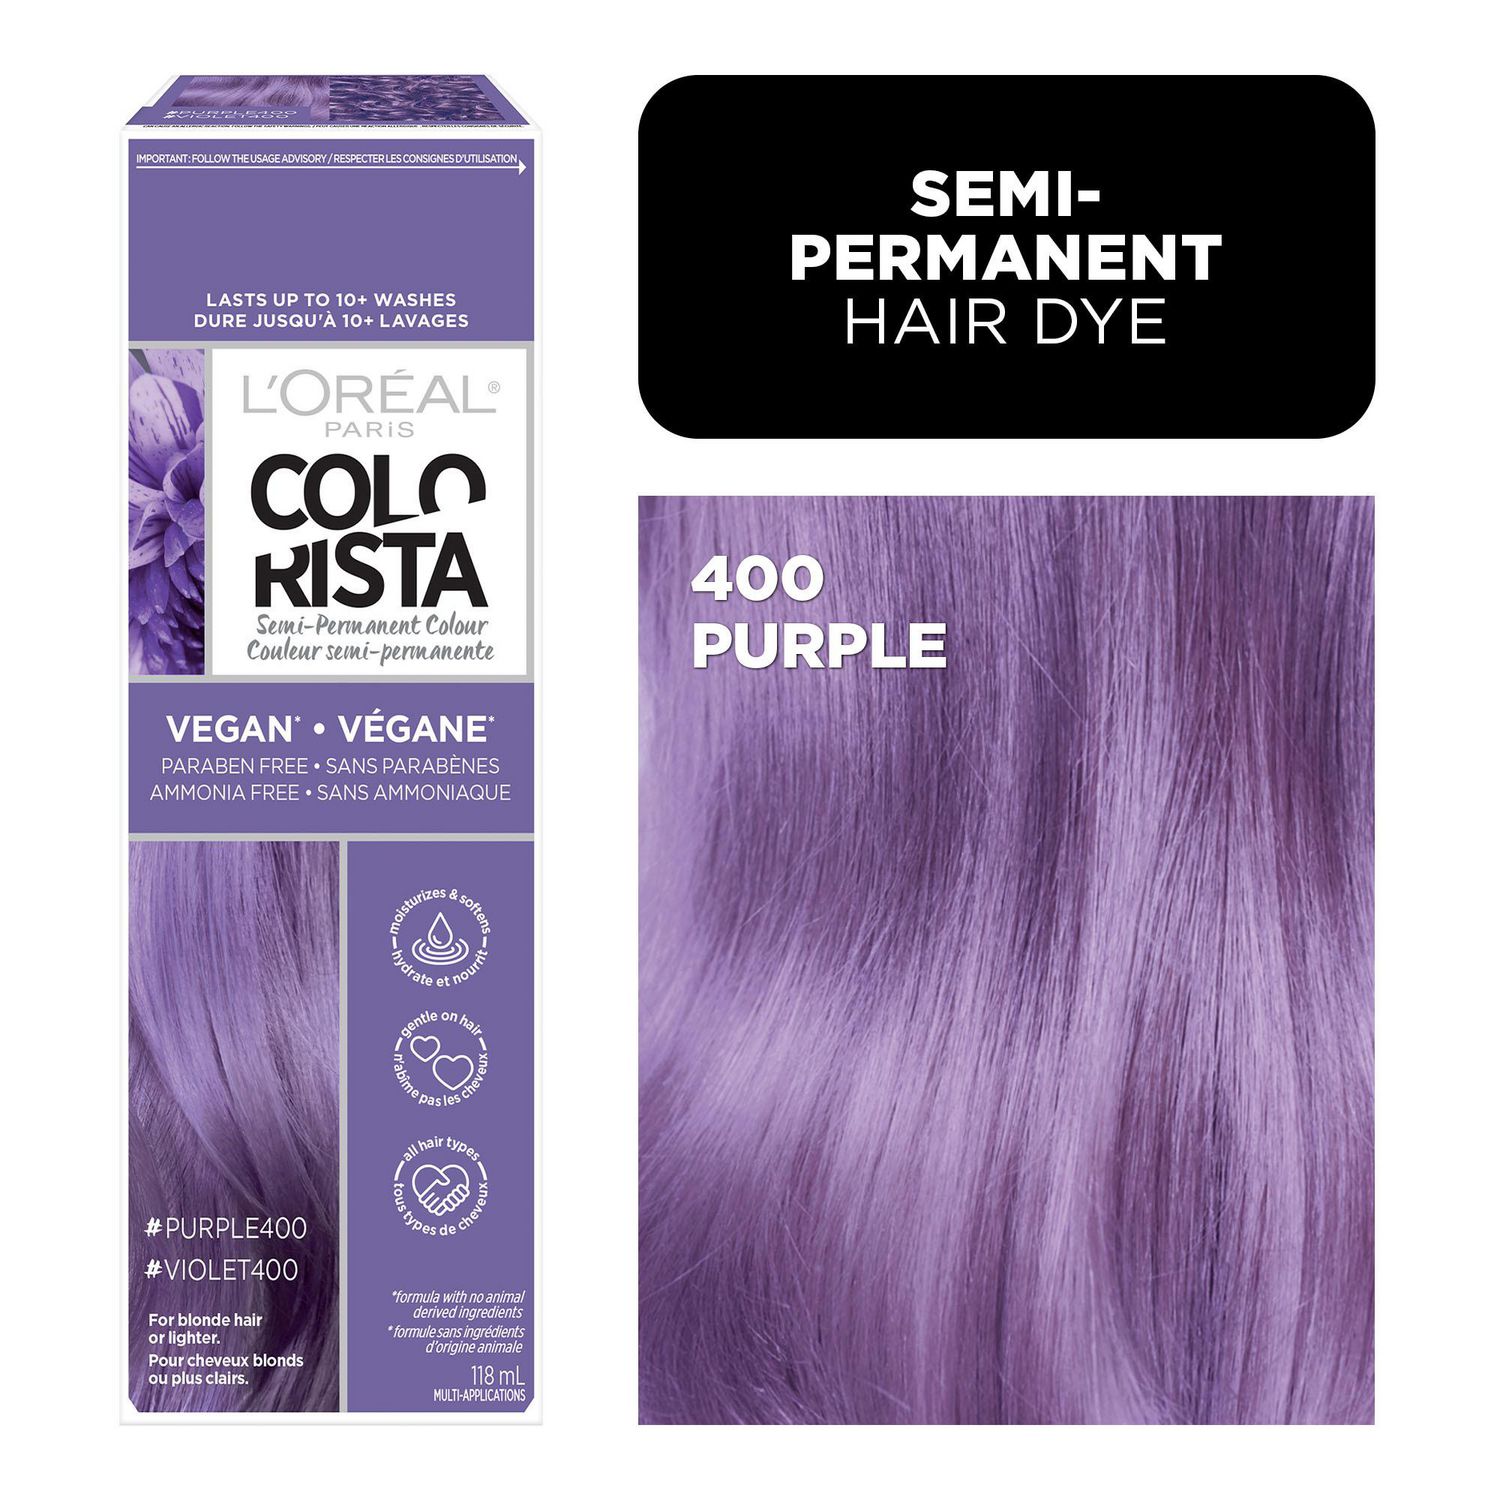 L'Oreal Paris Colorista Semi-permanent Hair Colour | Walmart Canada